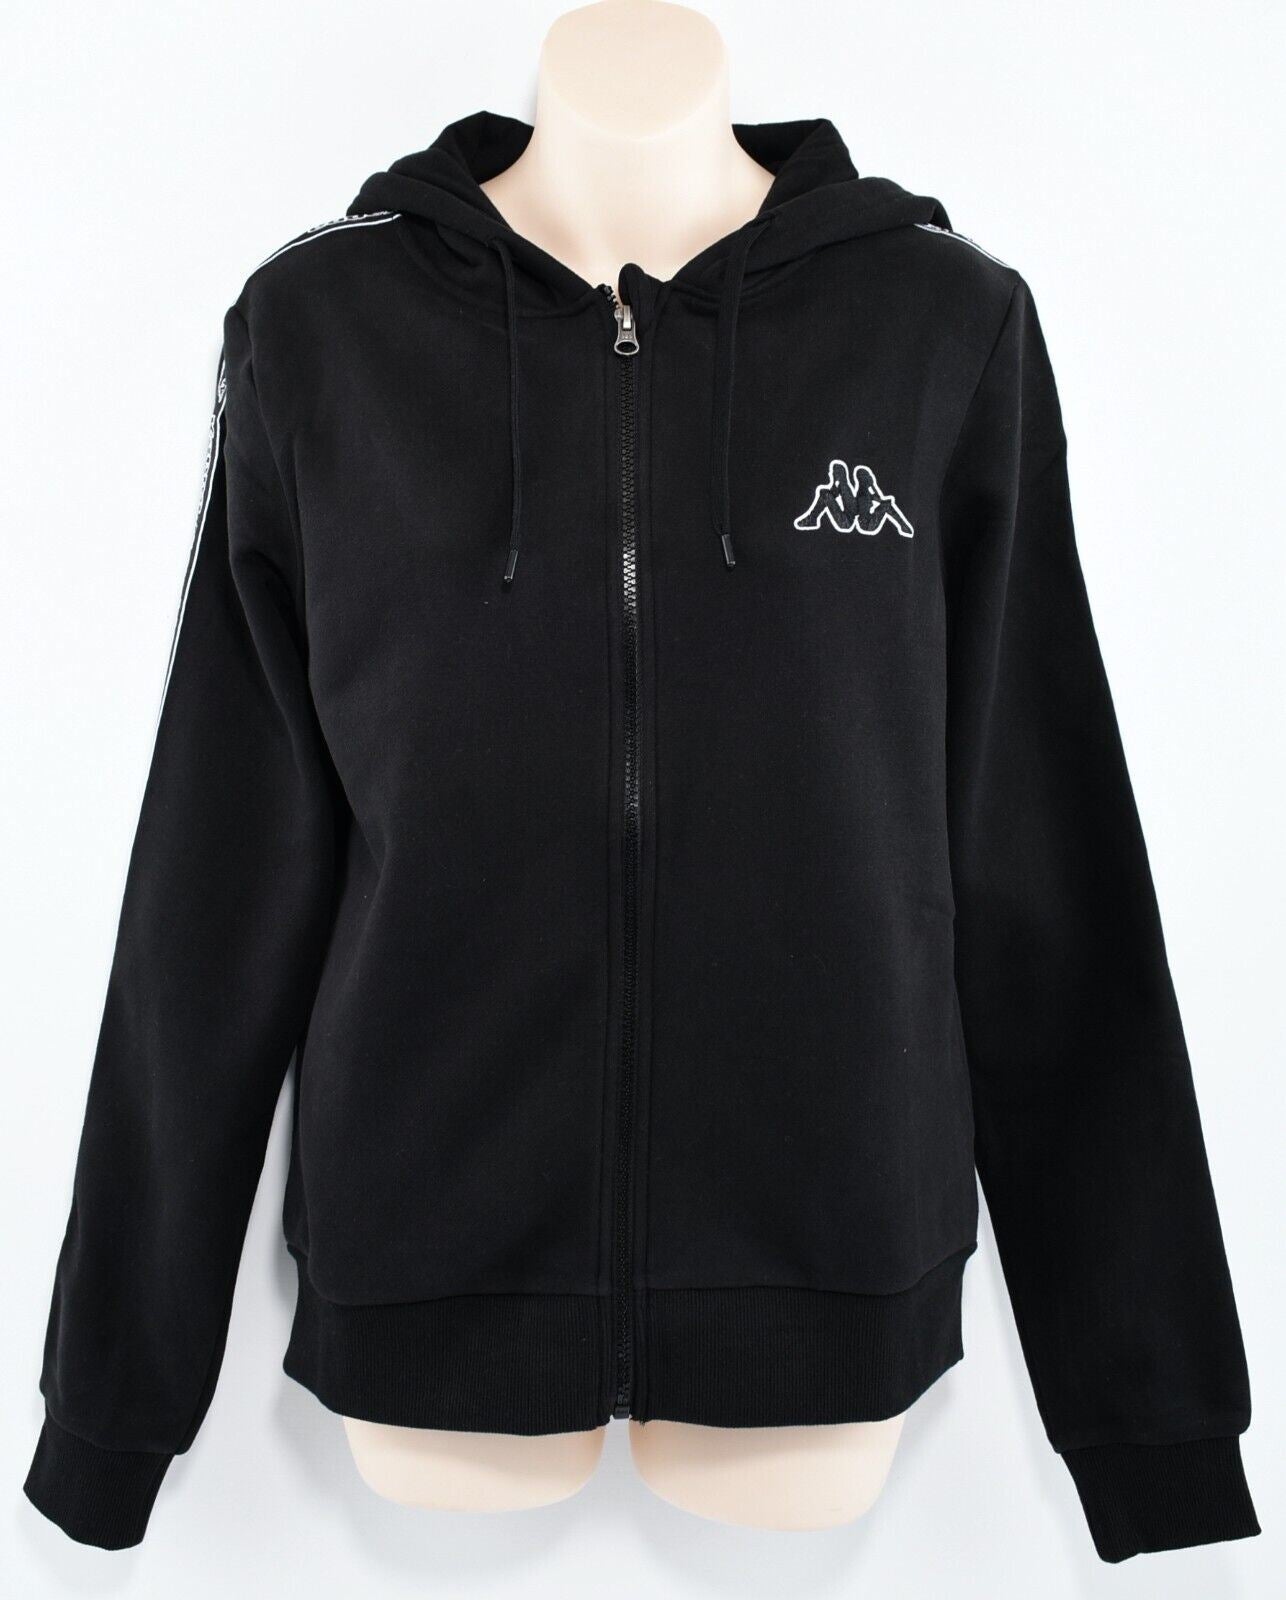 KAPPA Women's Full Zip Hoodie Jacket Sweatshirt, Black, size M (UK 12)